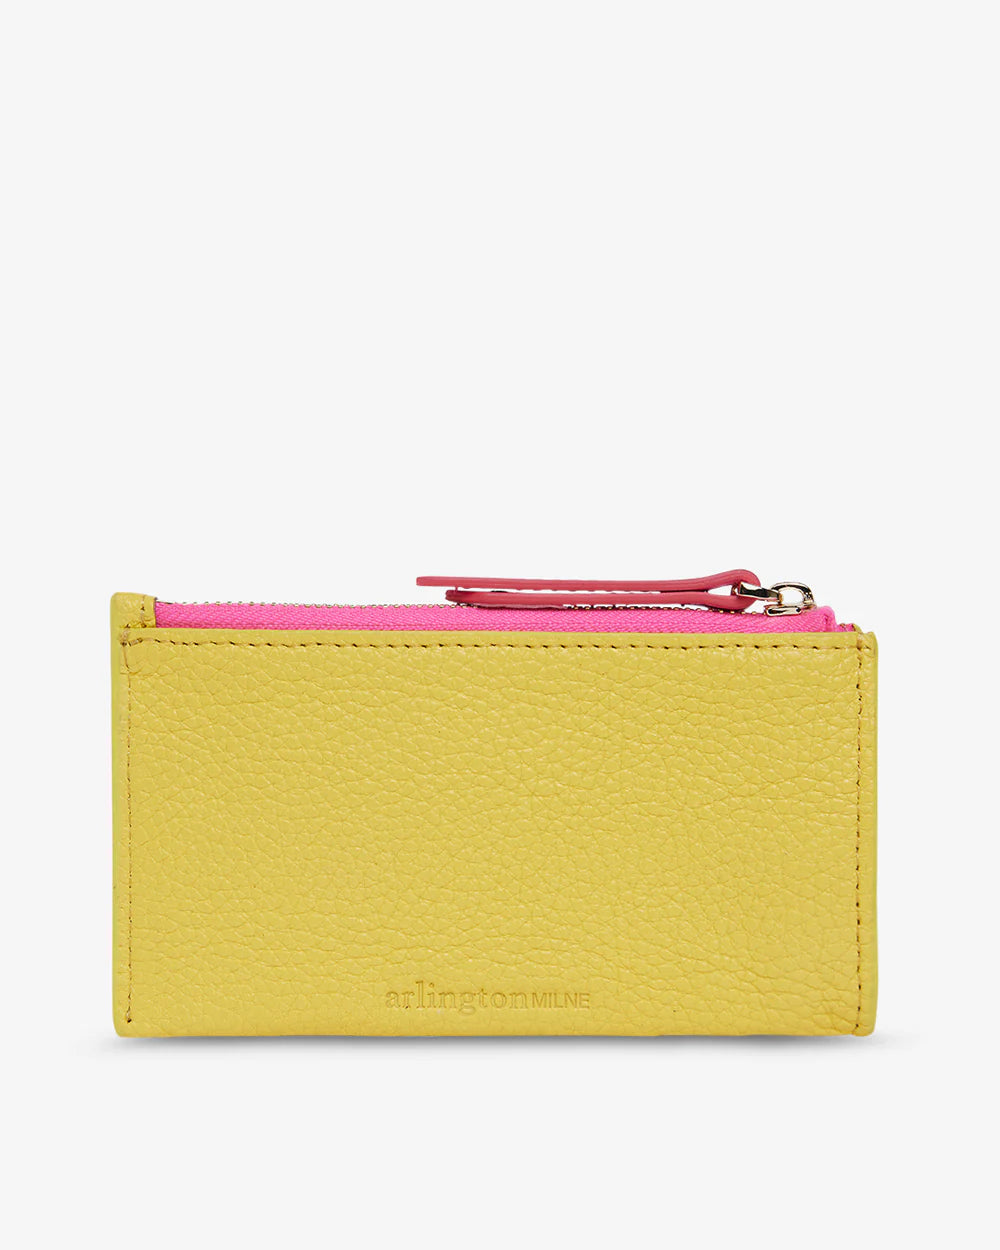 Arlington Milne | Compact Wallet | Yellow